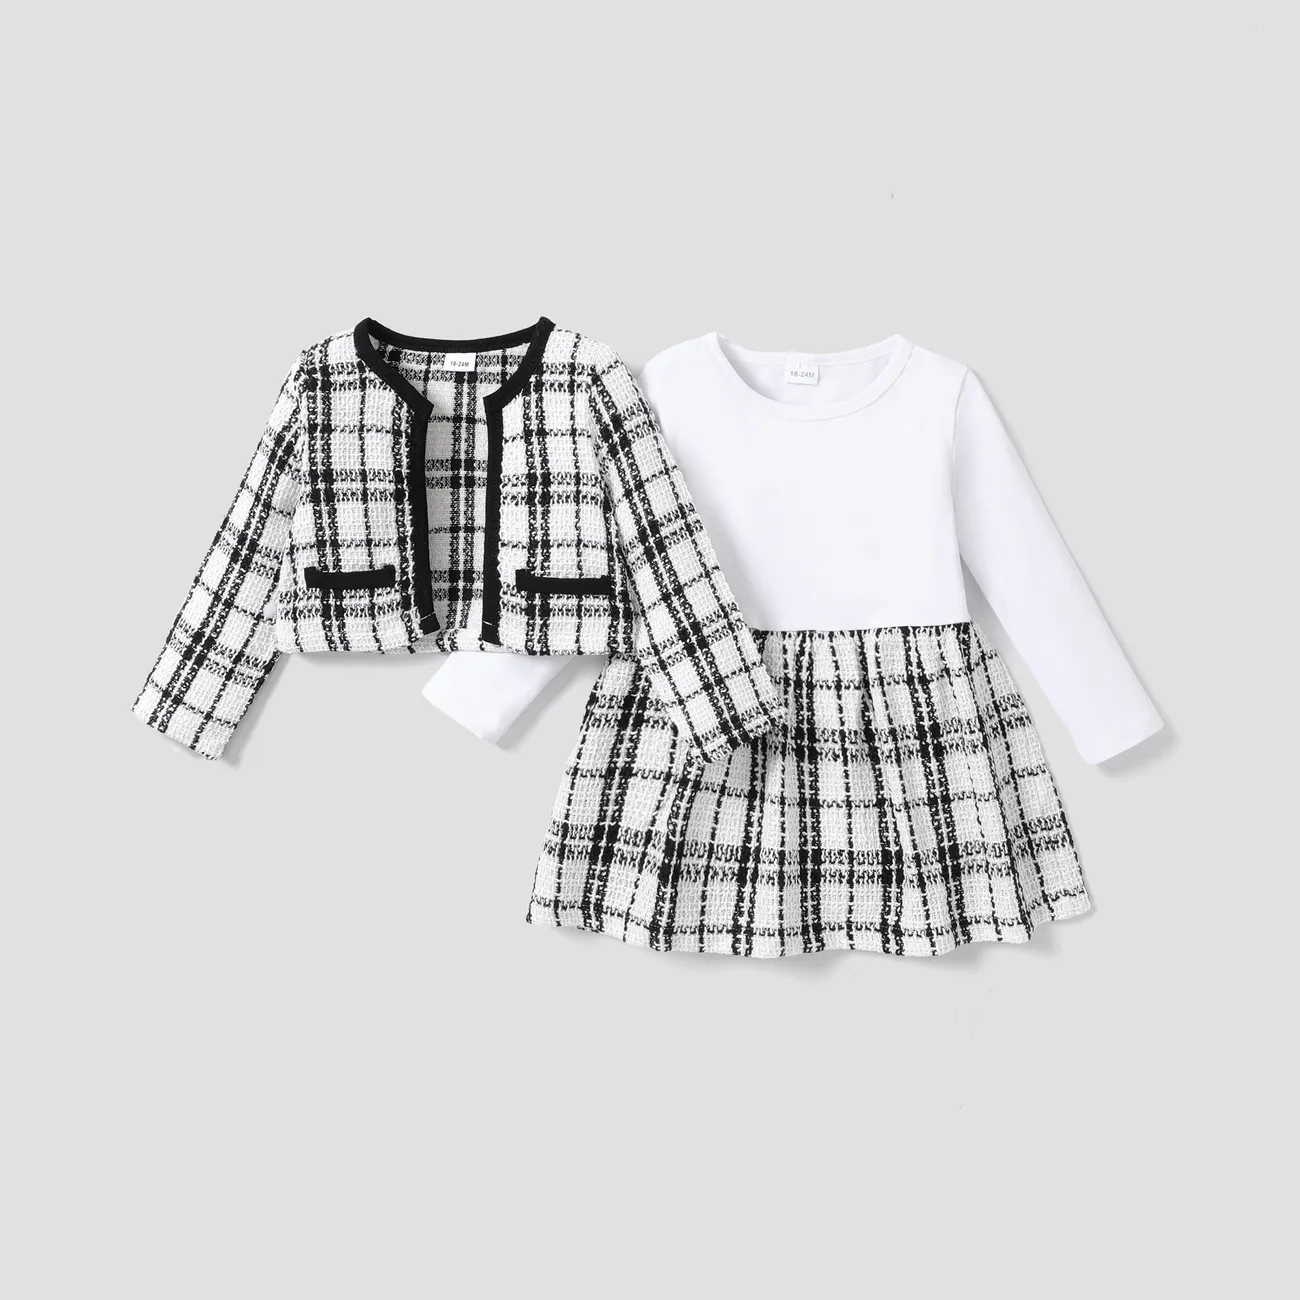 2-piece Toddler Girl Long-sleeve White Plaid Tweed Stitching Dress and Cardigan Set Black/White big image 1